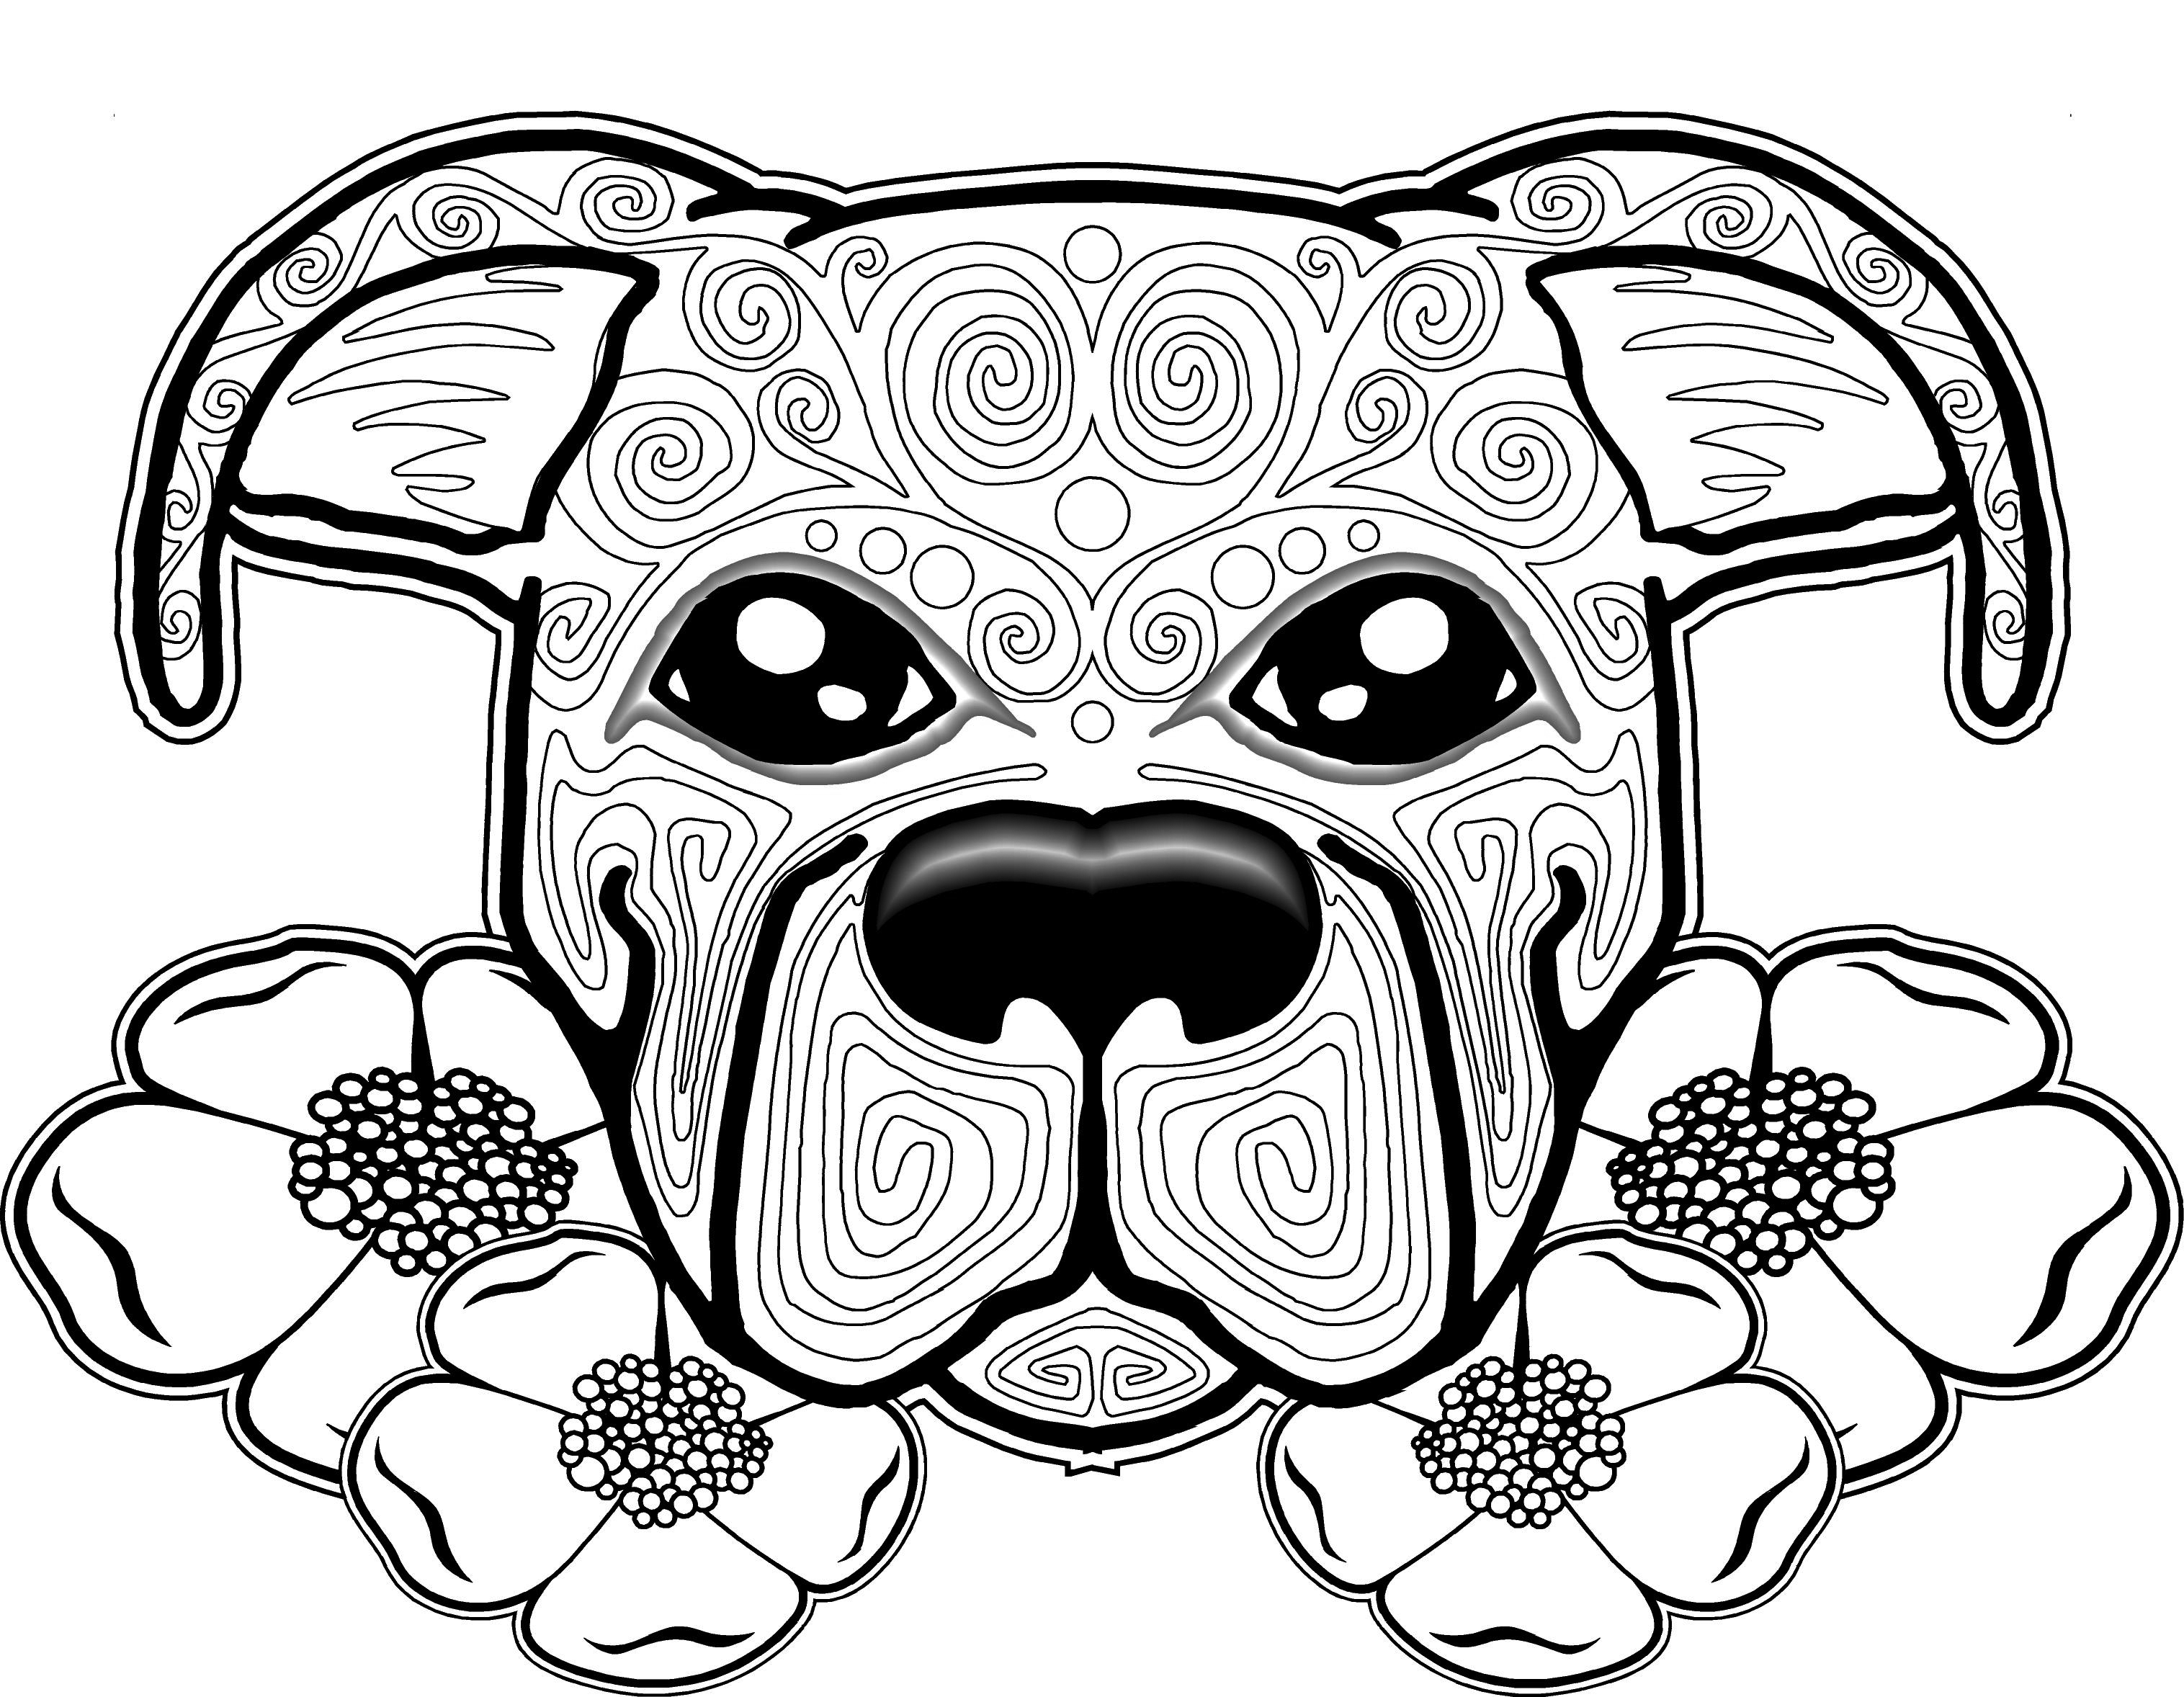 Dog Mandala Coloring Pages at GetDrawings | Free download